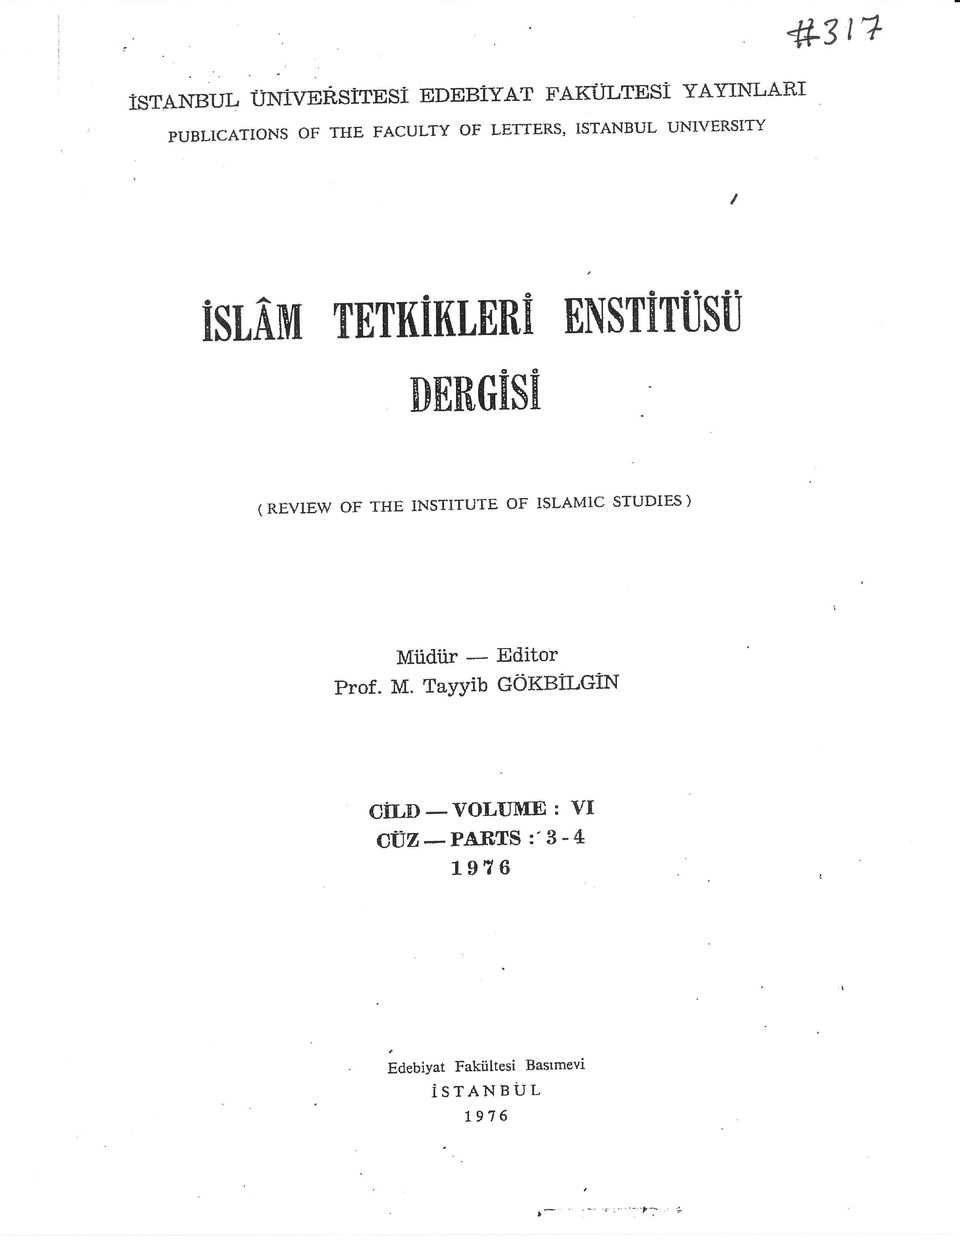 ( REVIEW OF THE INSTITUTE OF ISLAMTC STUDIES ) Mi